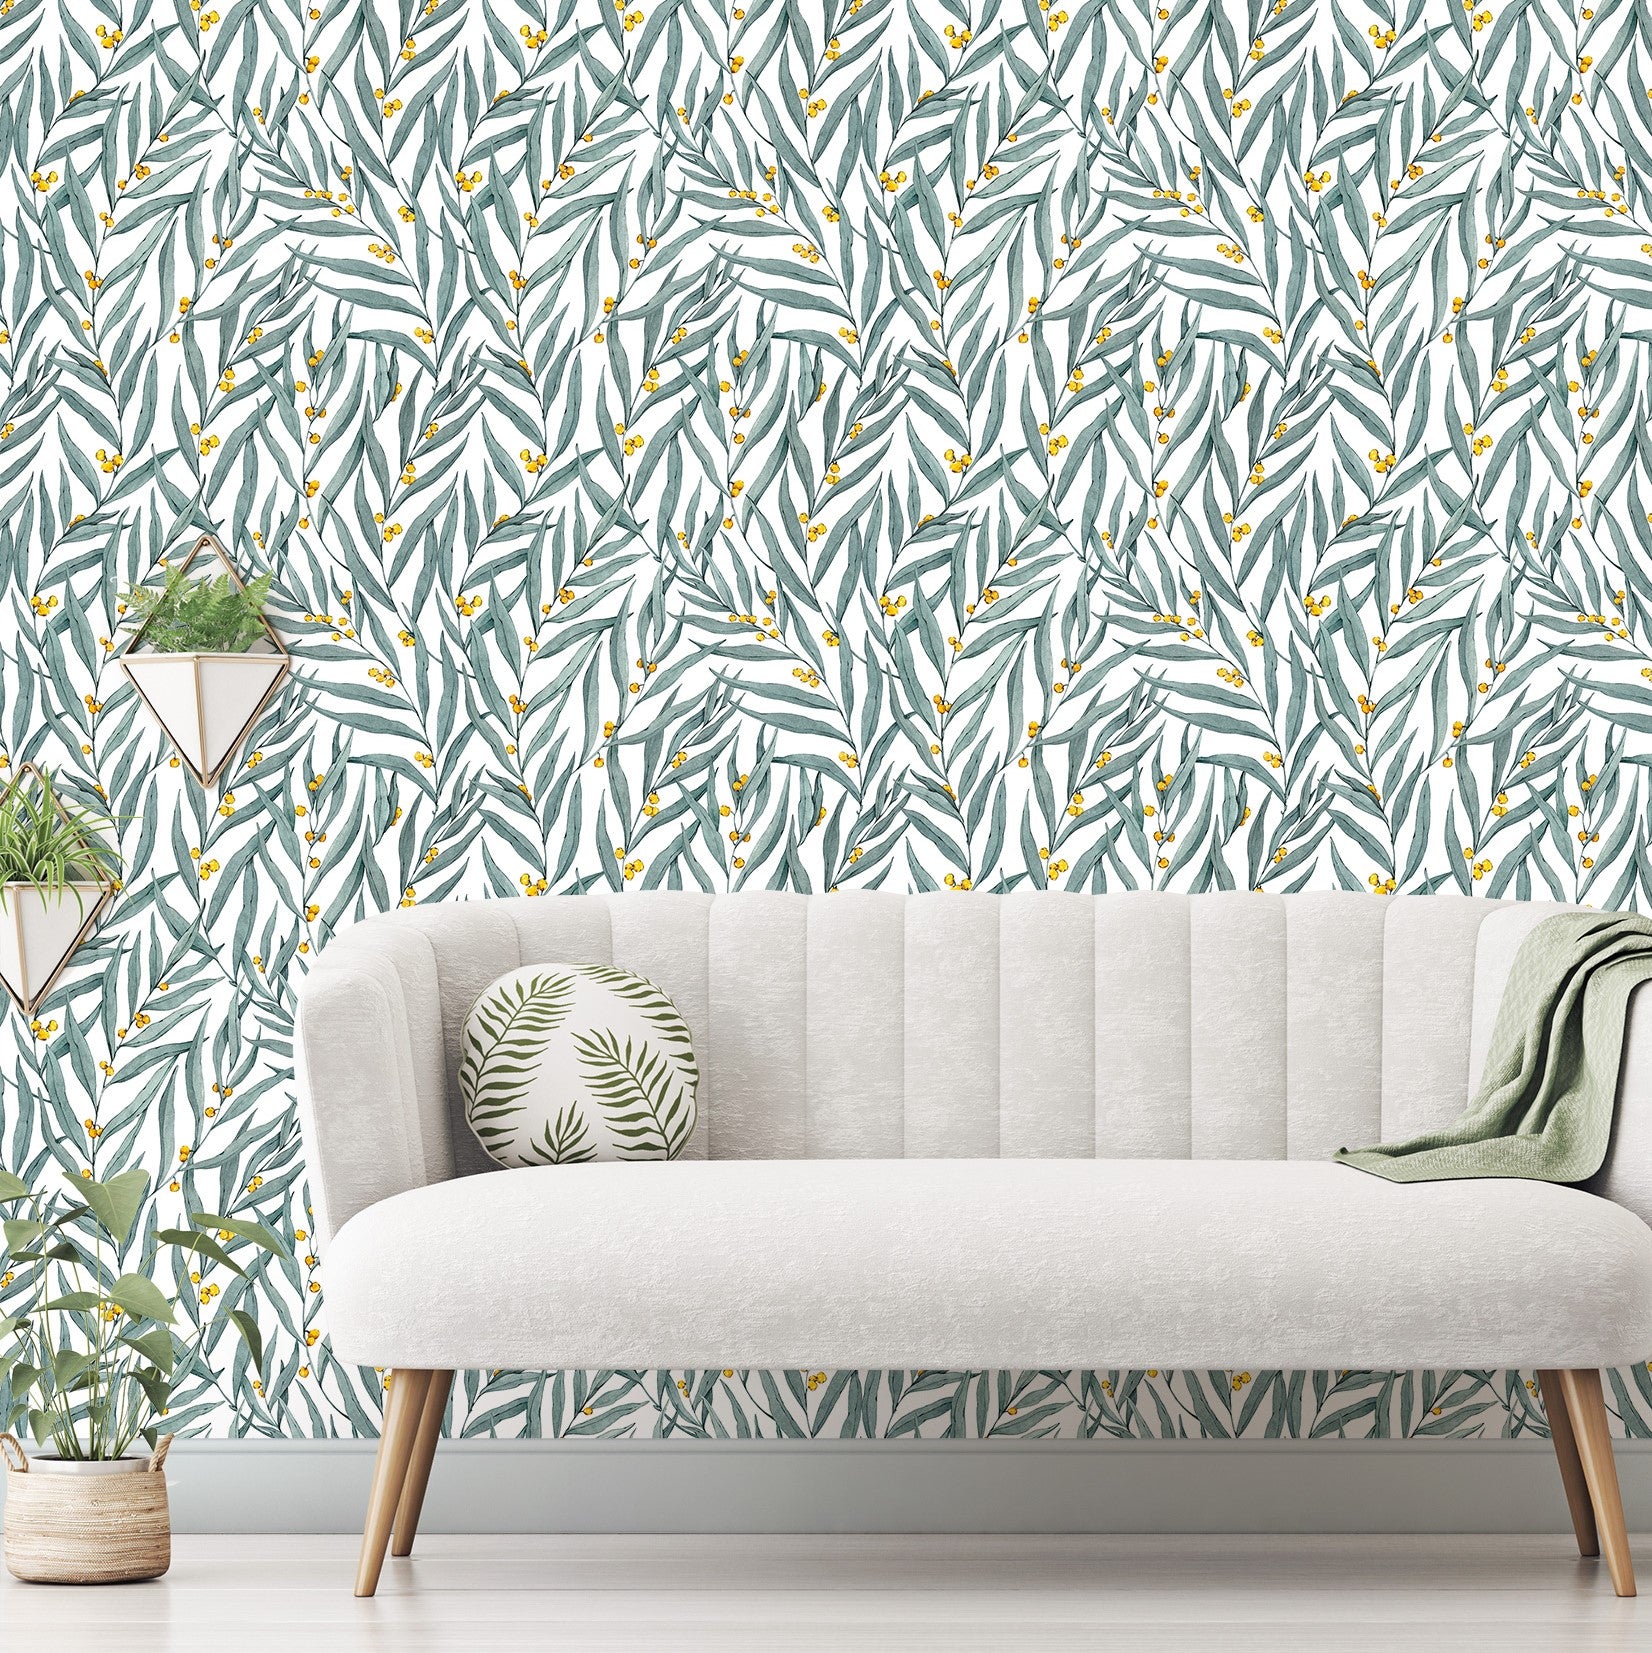 Golden Wattle Leaves White Floral Wallpaper